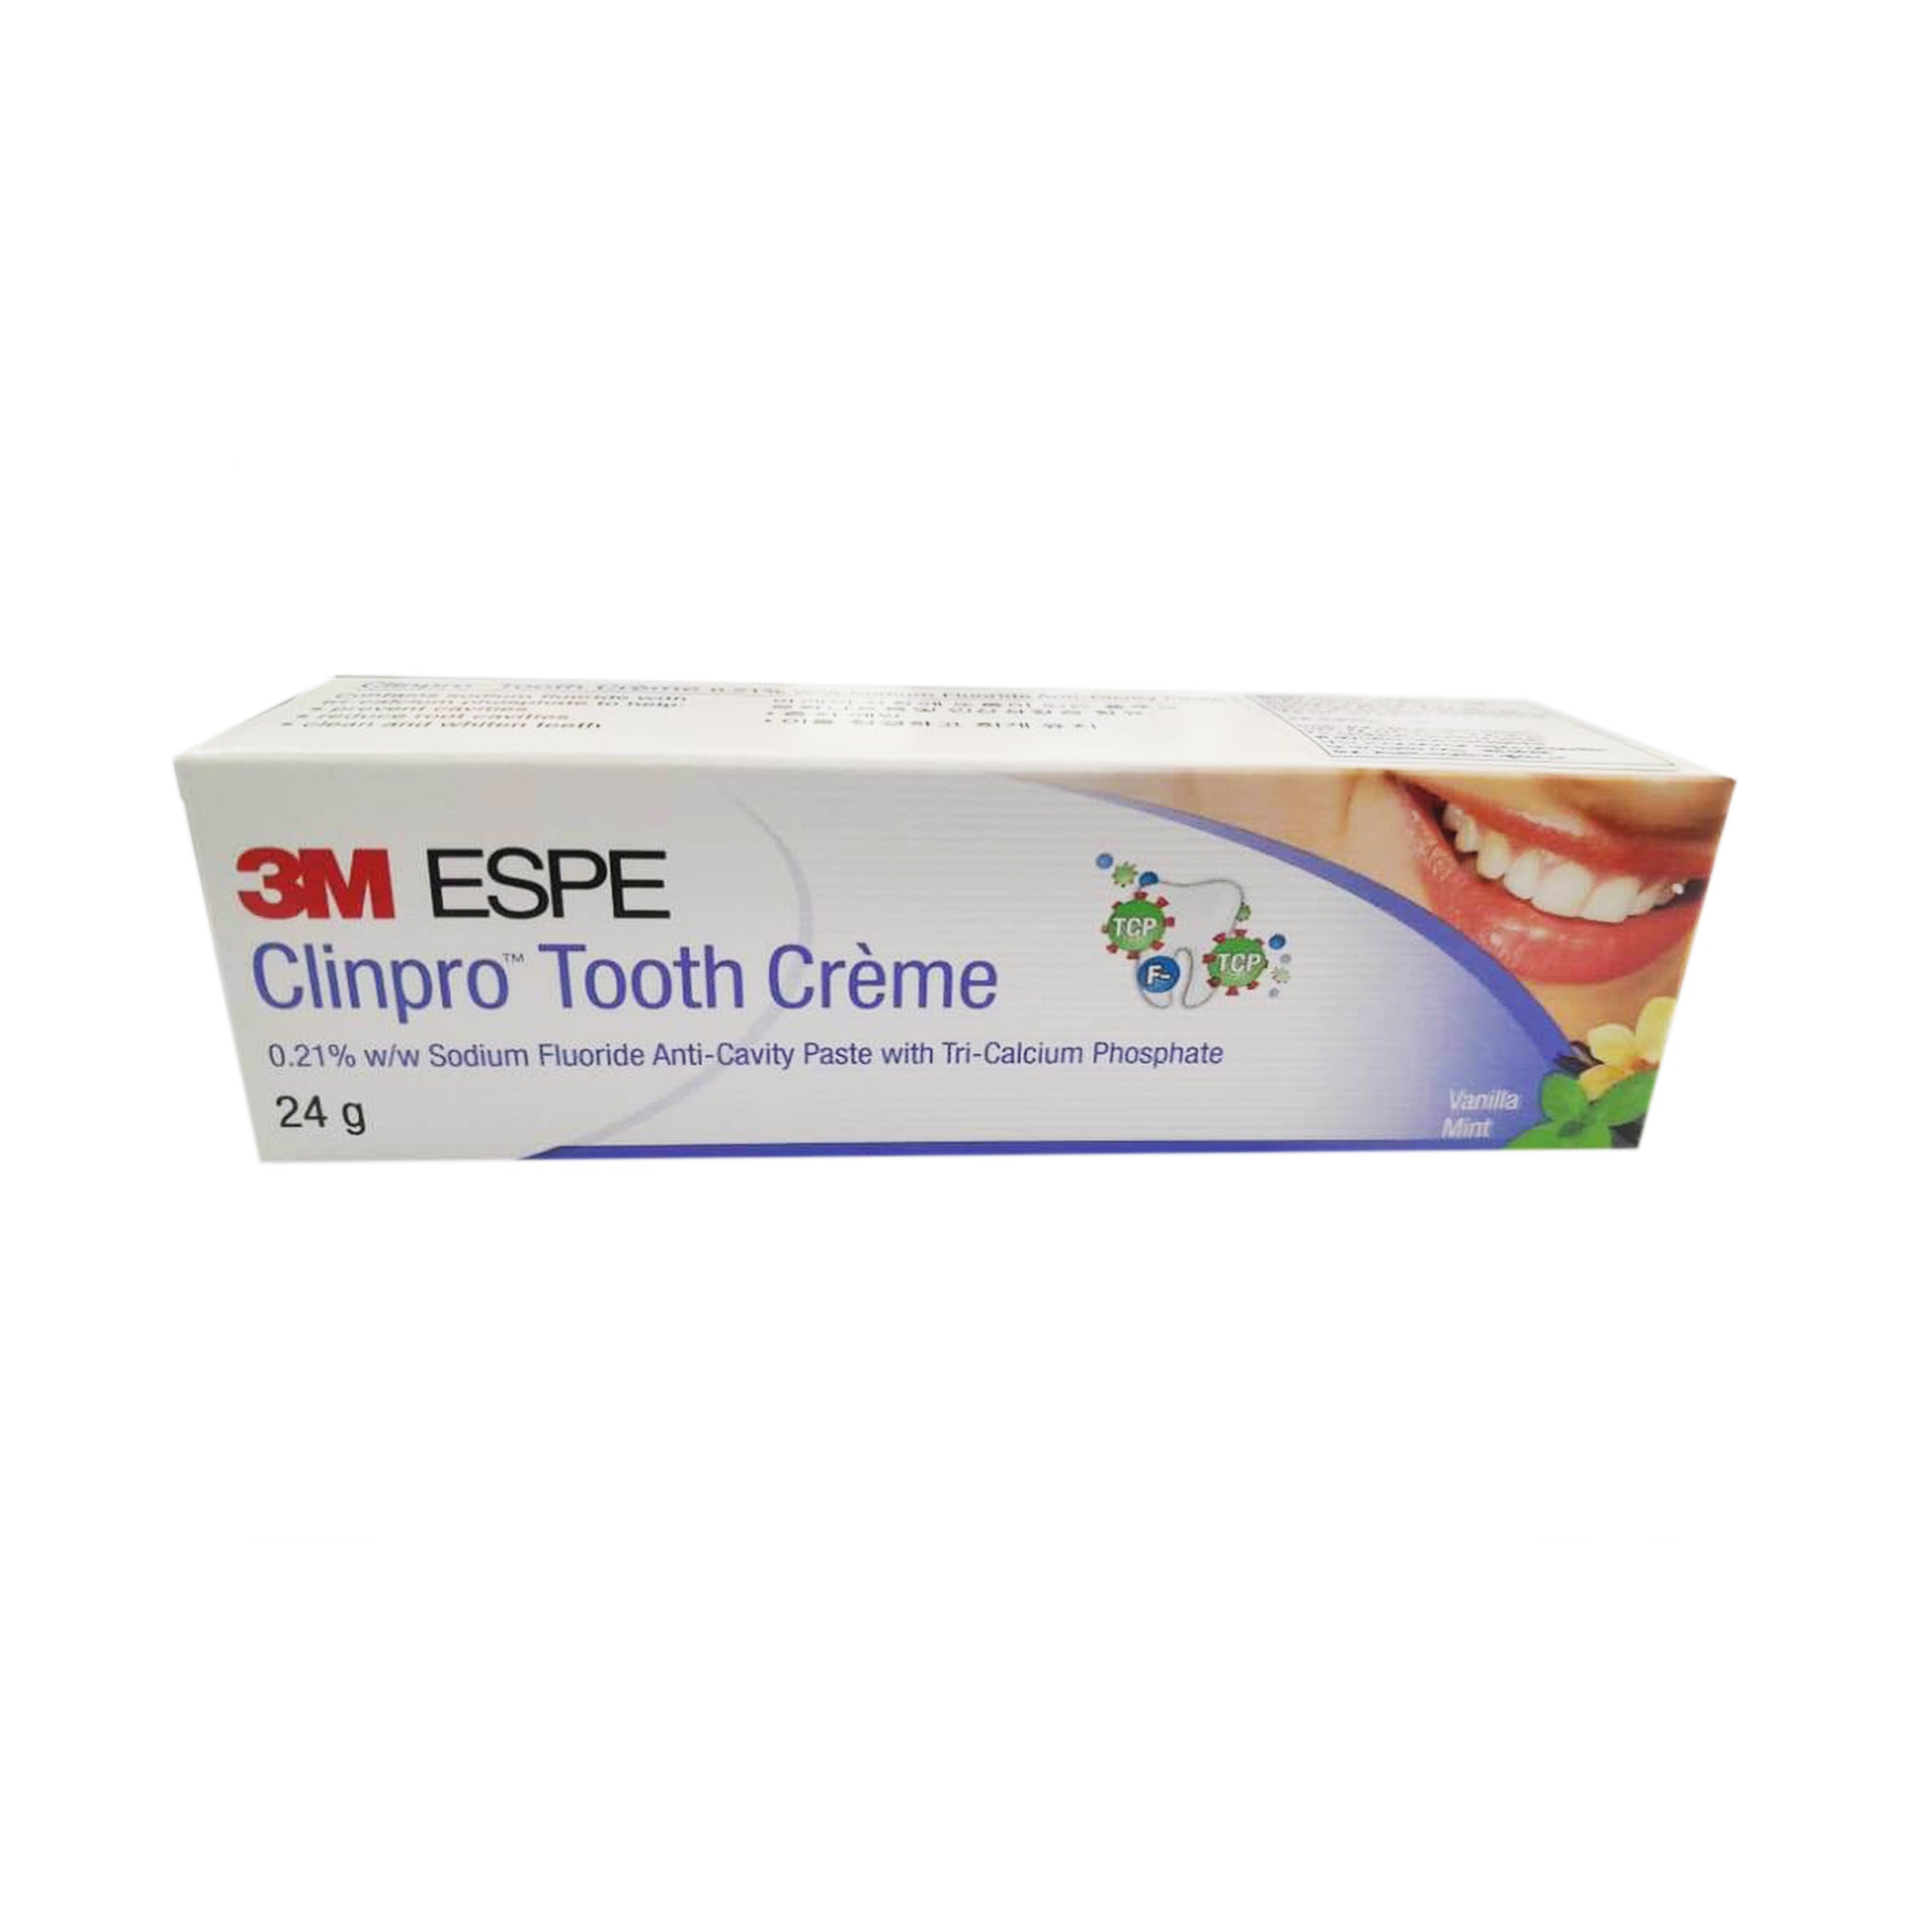 3M ESPE Clinpro Tooth Creme / Anti cavity Toothpaste